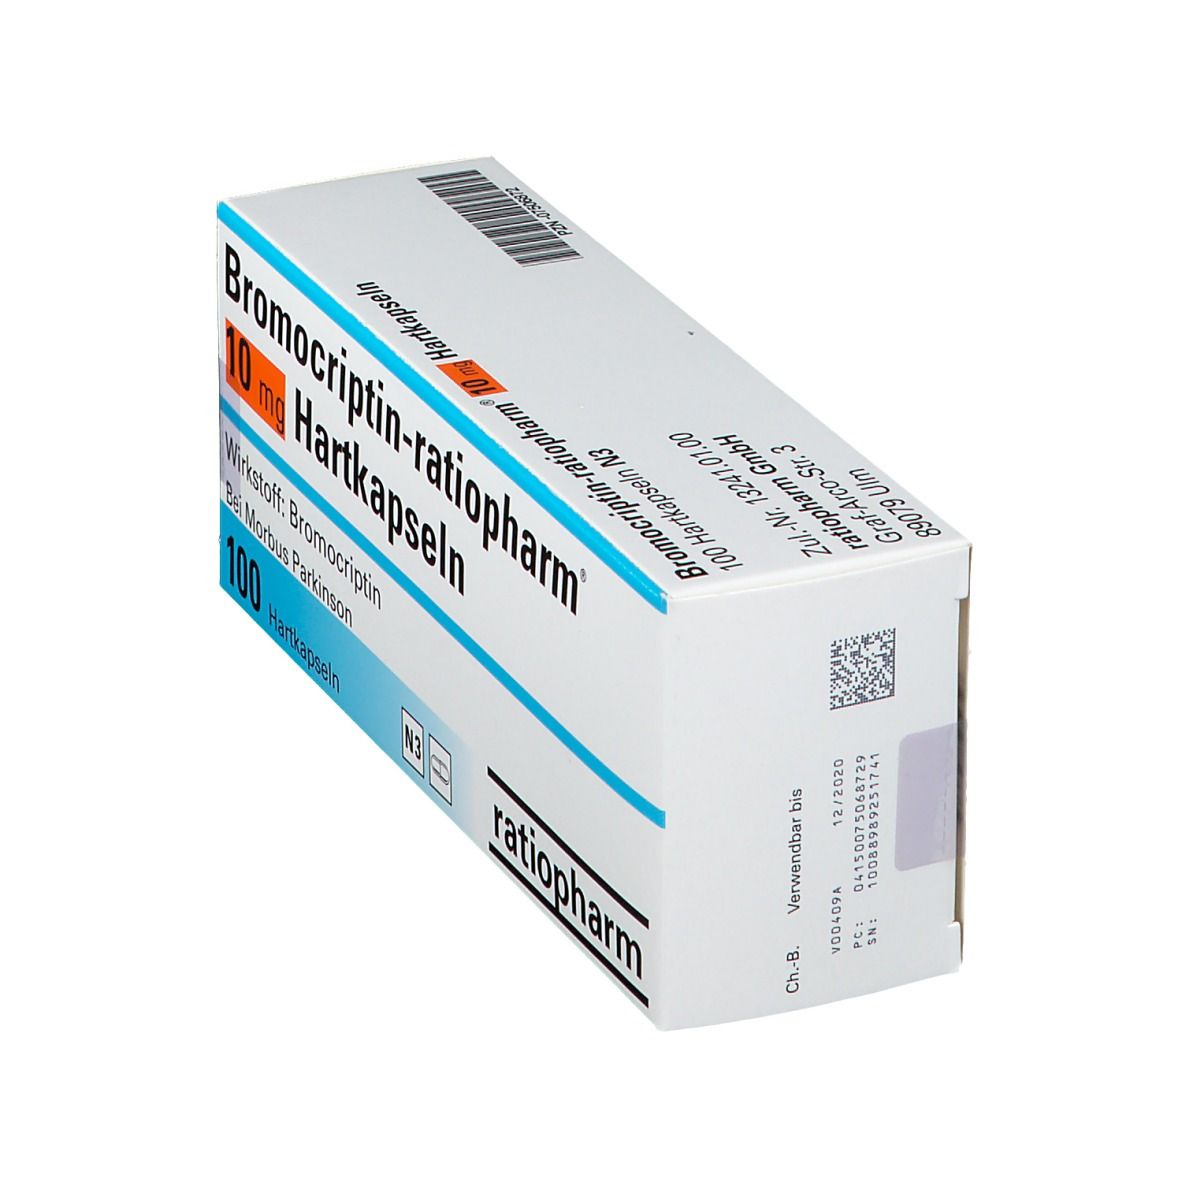 Bromocriptin-ratiopharm® 10 mg